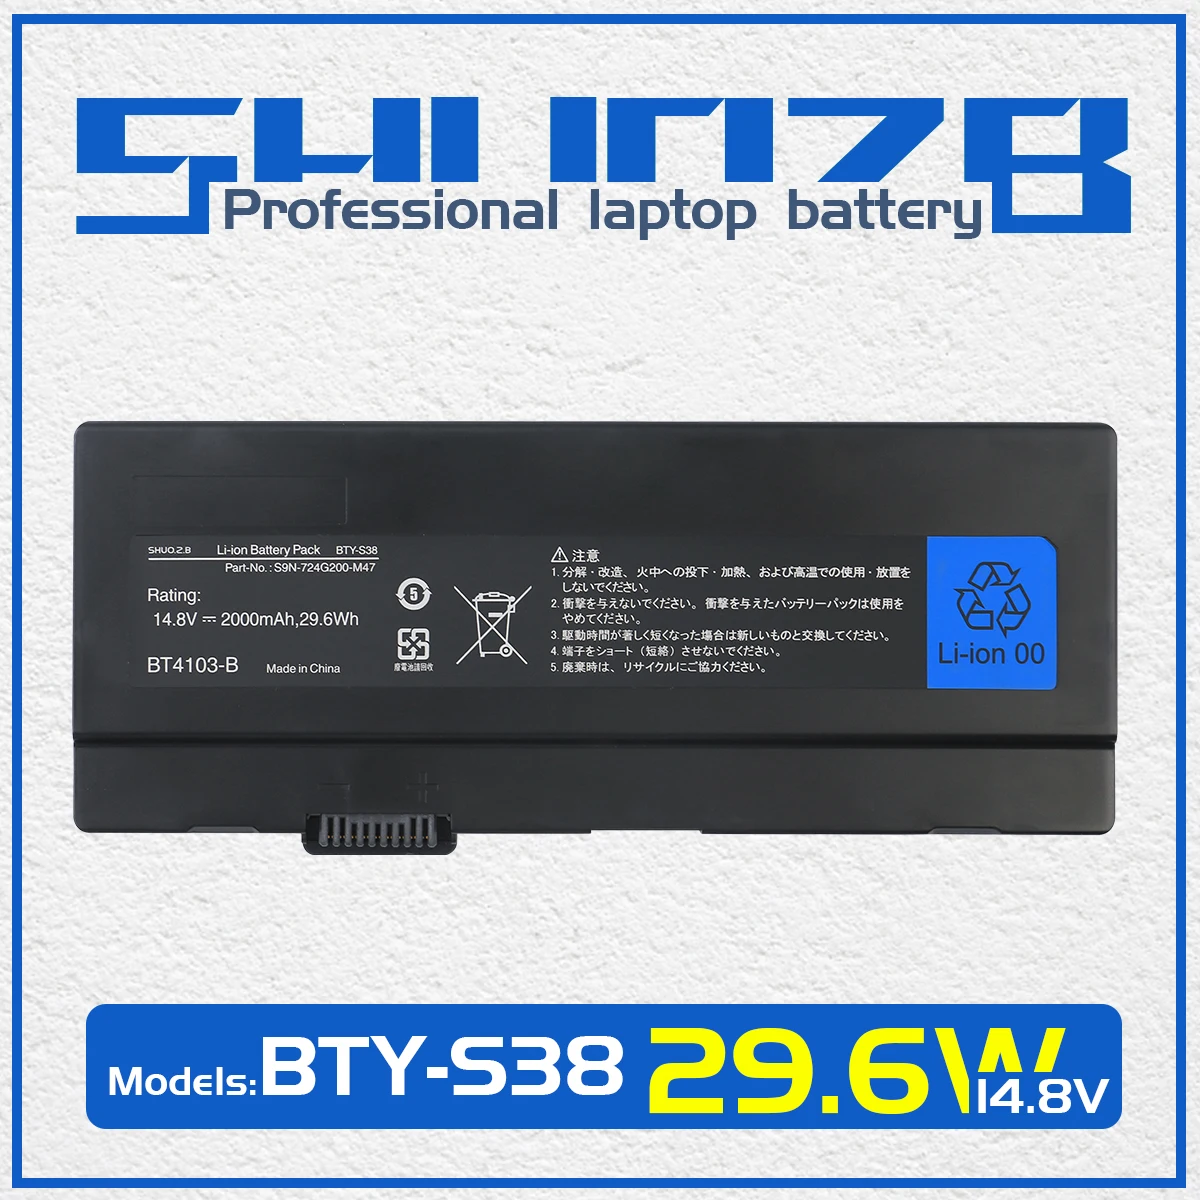 

SHUOZB 14.8V 29.6Wh BTY-S38 Laptop Battery For MSI X30 X30-M X30-S series S9N-724H201-M47 BT4103-B 2000mAh Free Tools